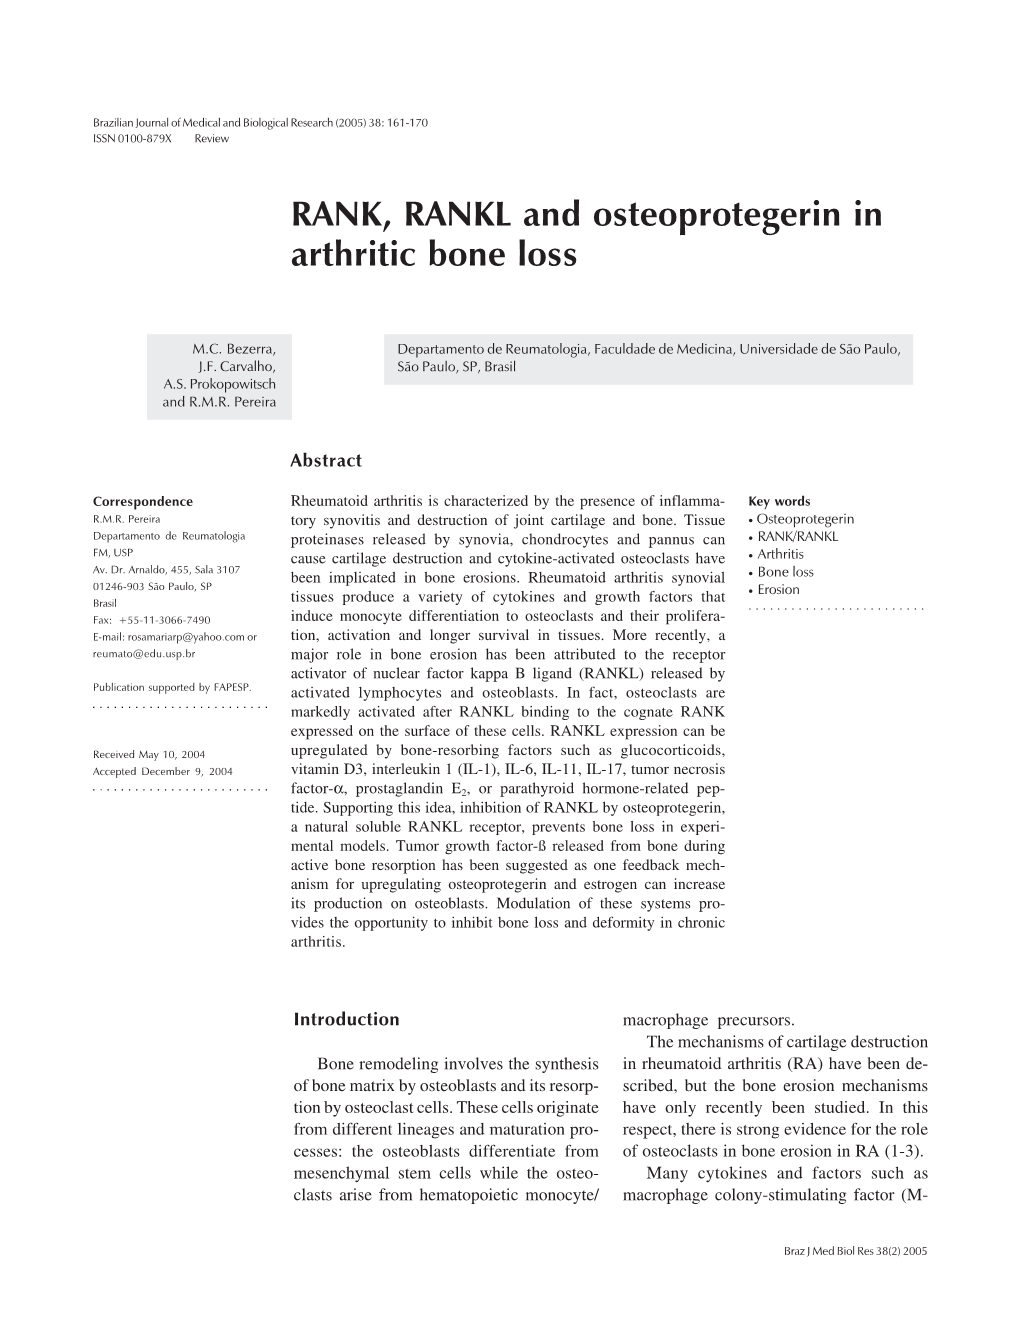 RANK, RANKL and Osteoprotegerin in Arthritic Bone Loss